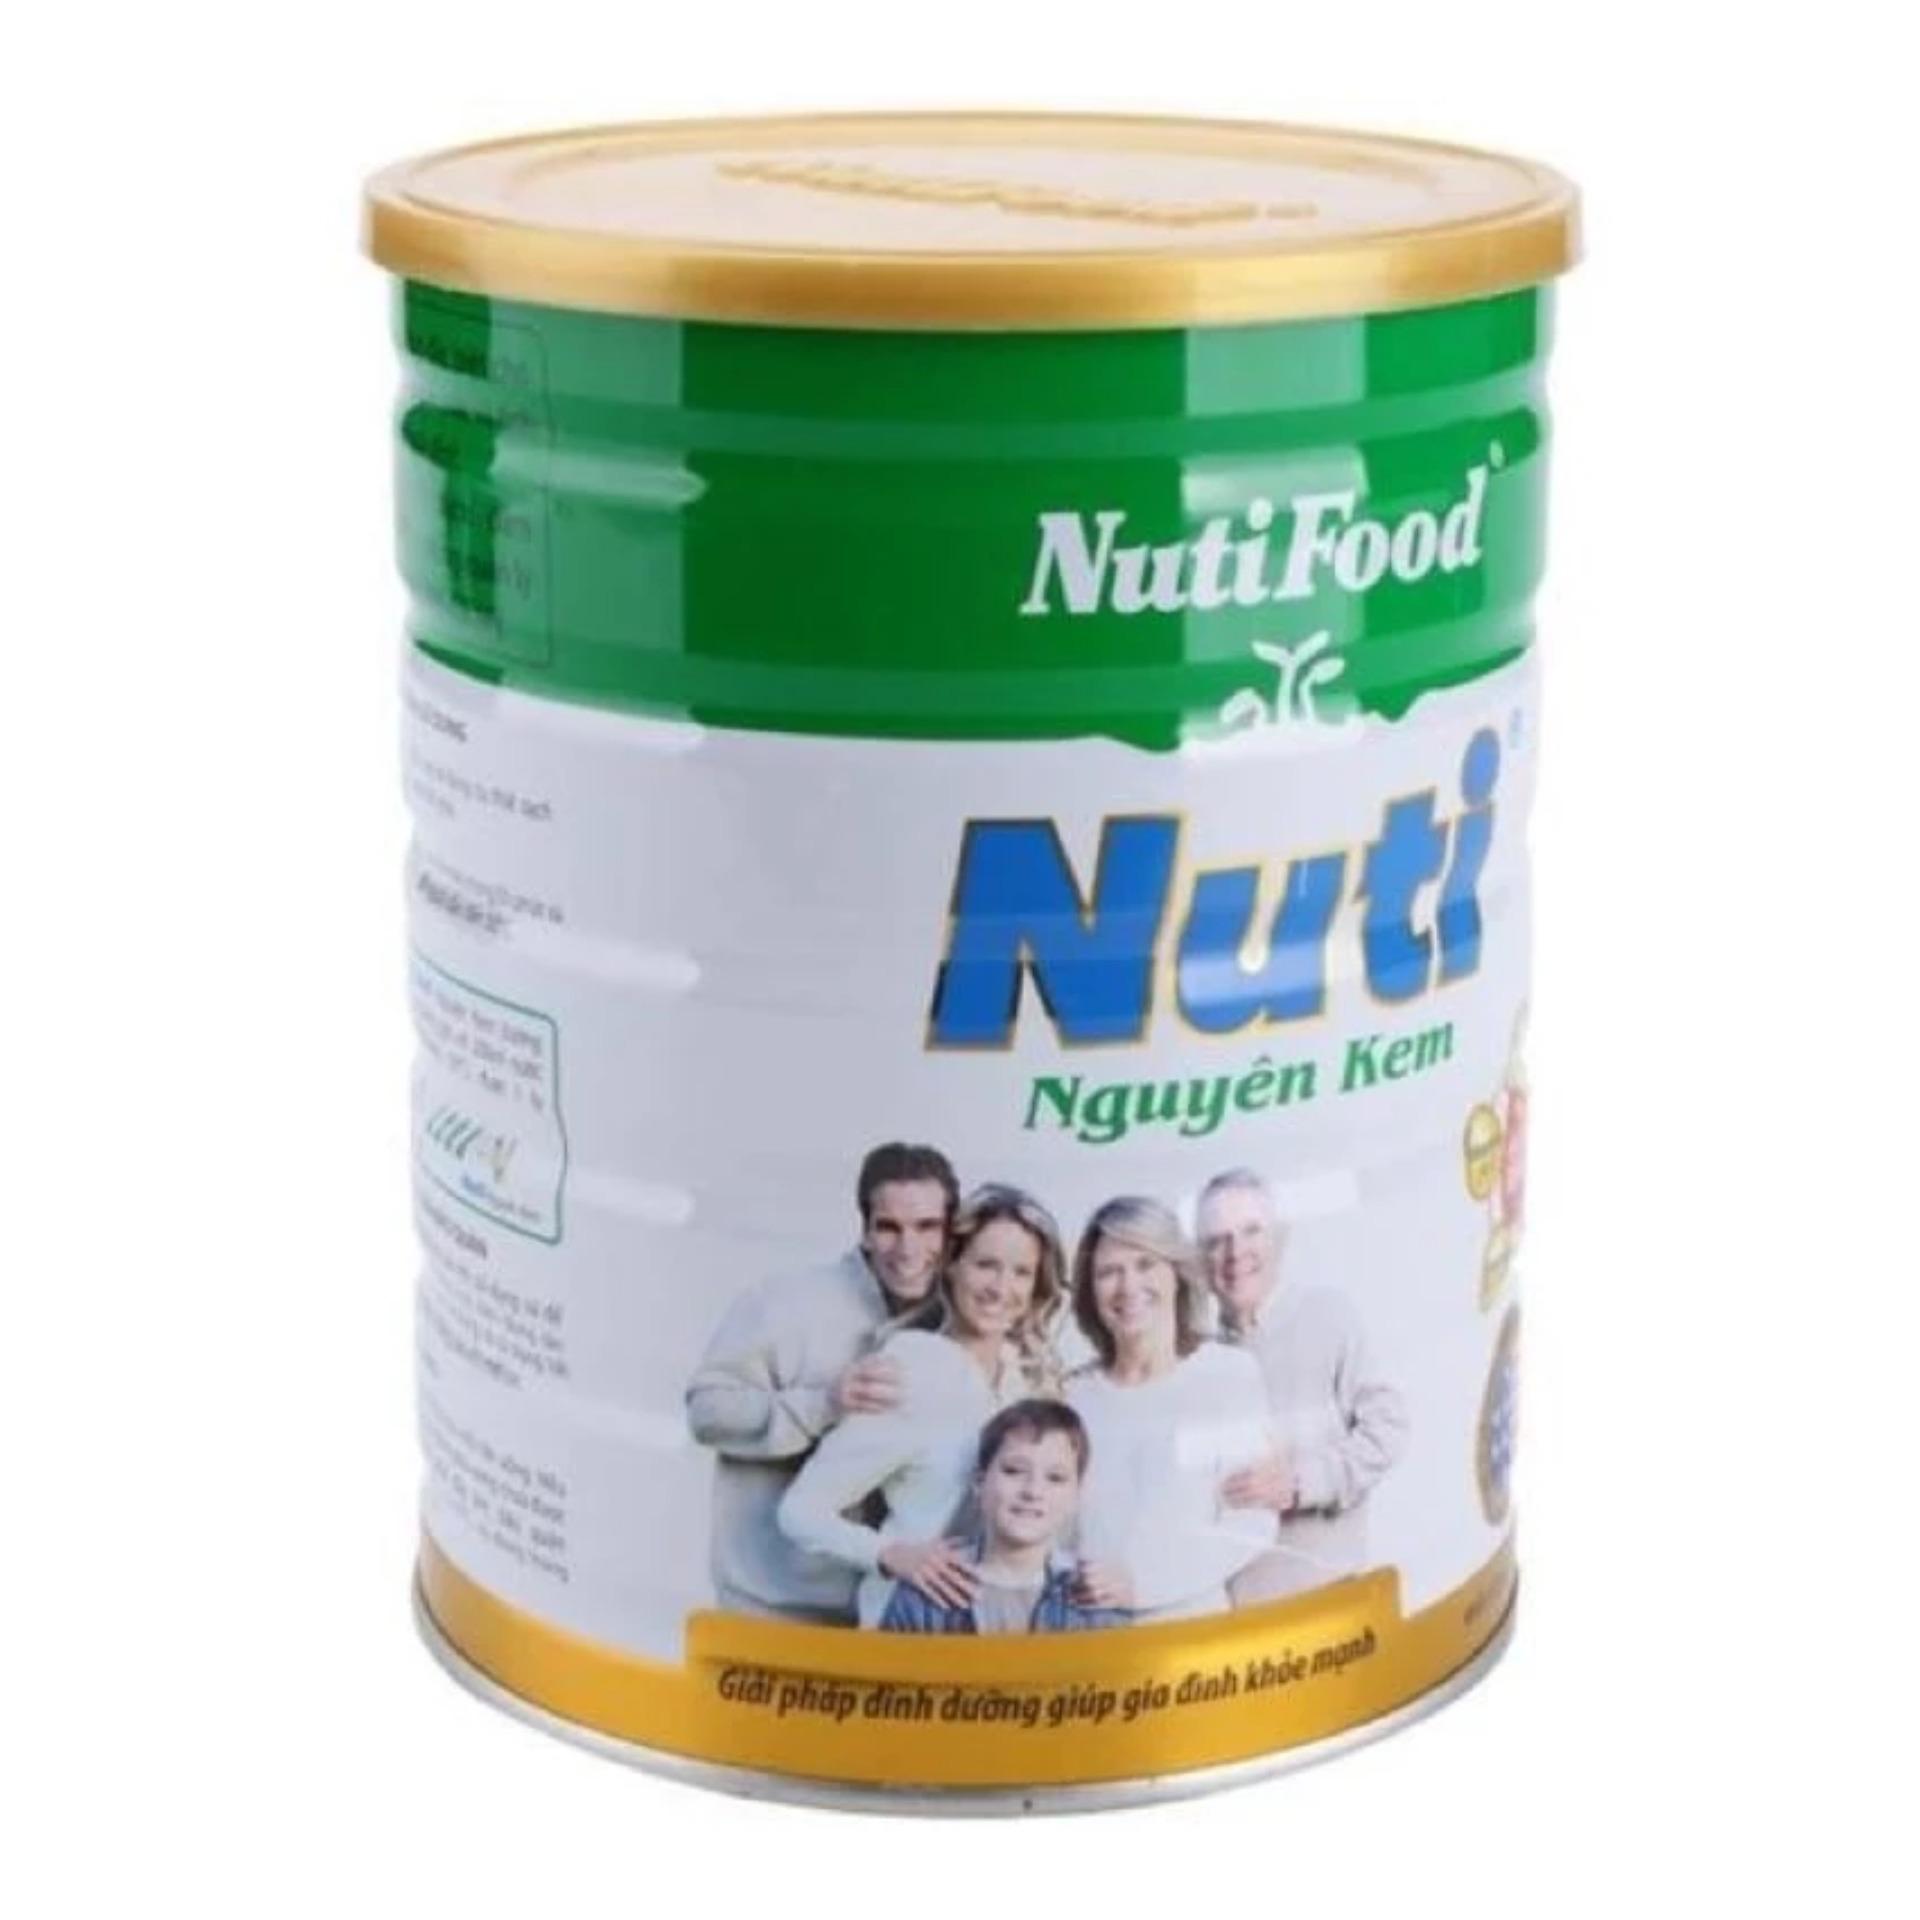 Sữa Nuti nguyên kem 900g Nutifood